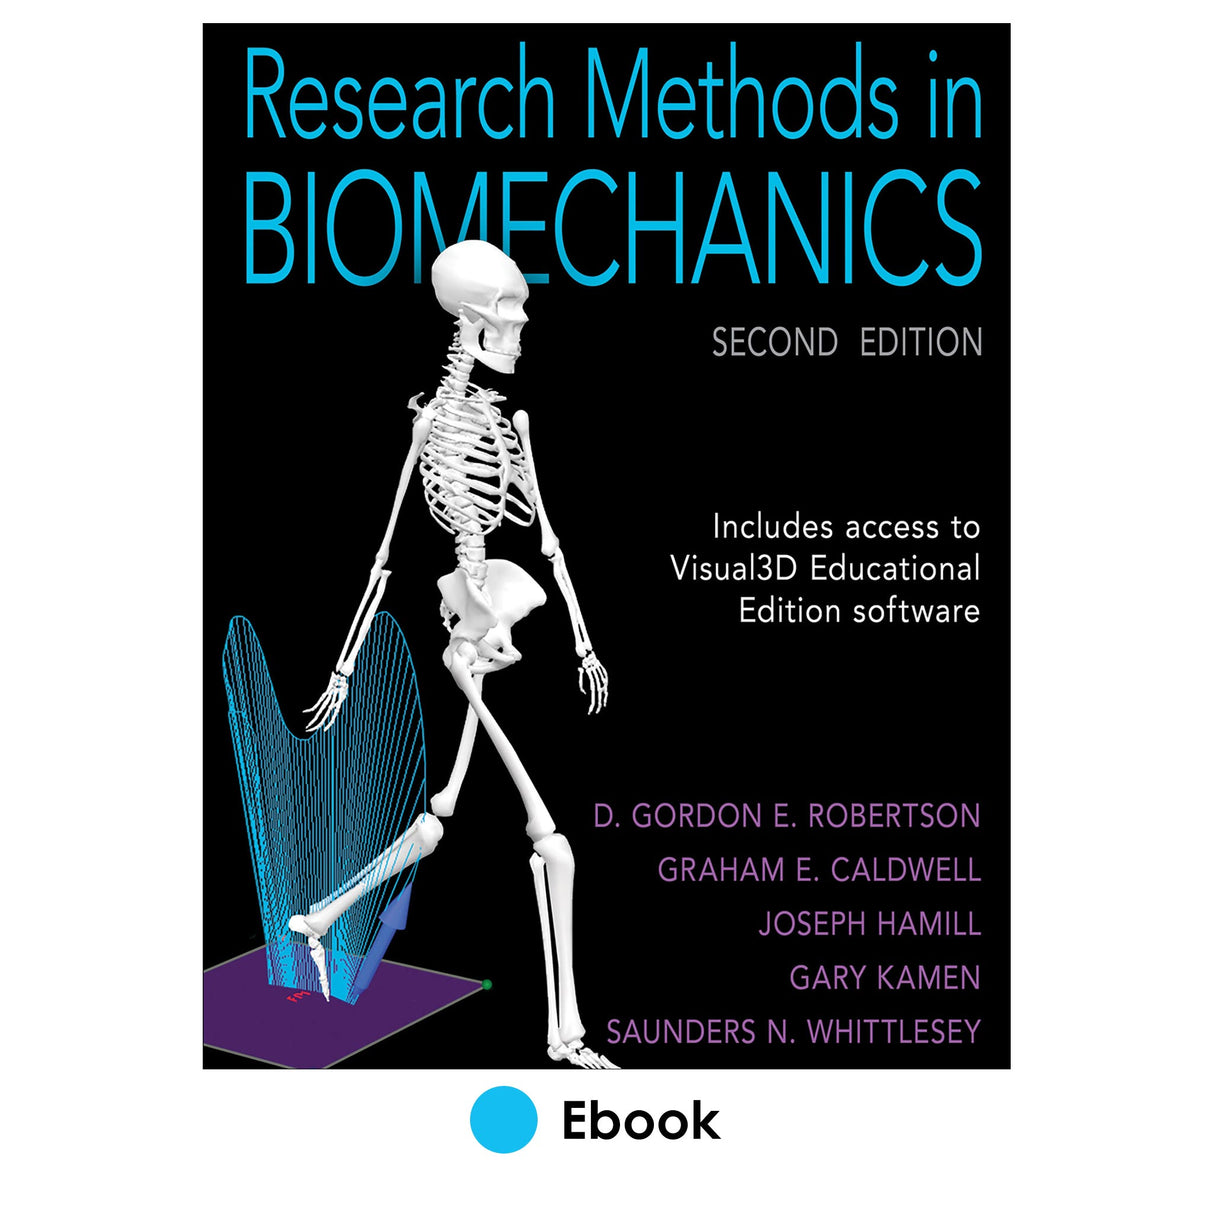 Research Methods in Biomechanics 2nd Edition PDF